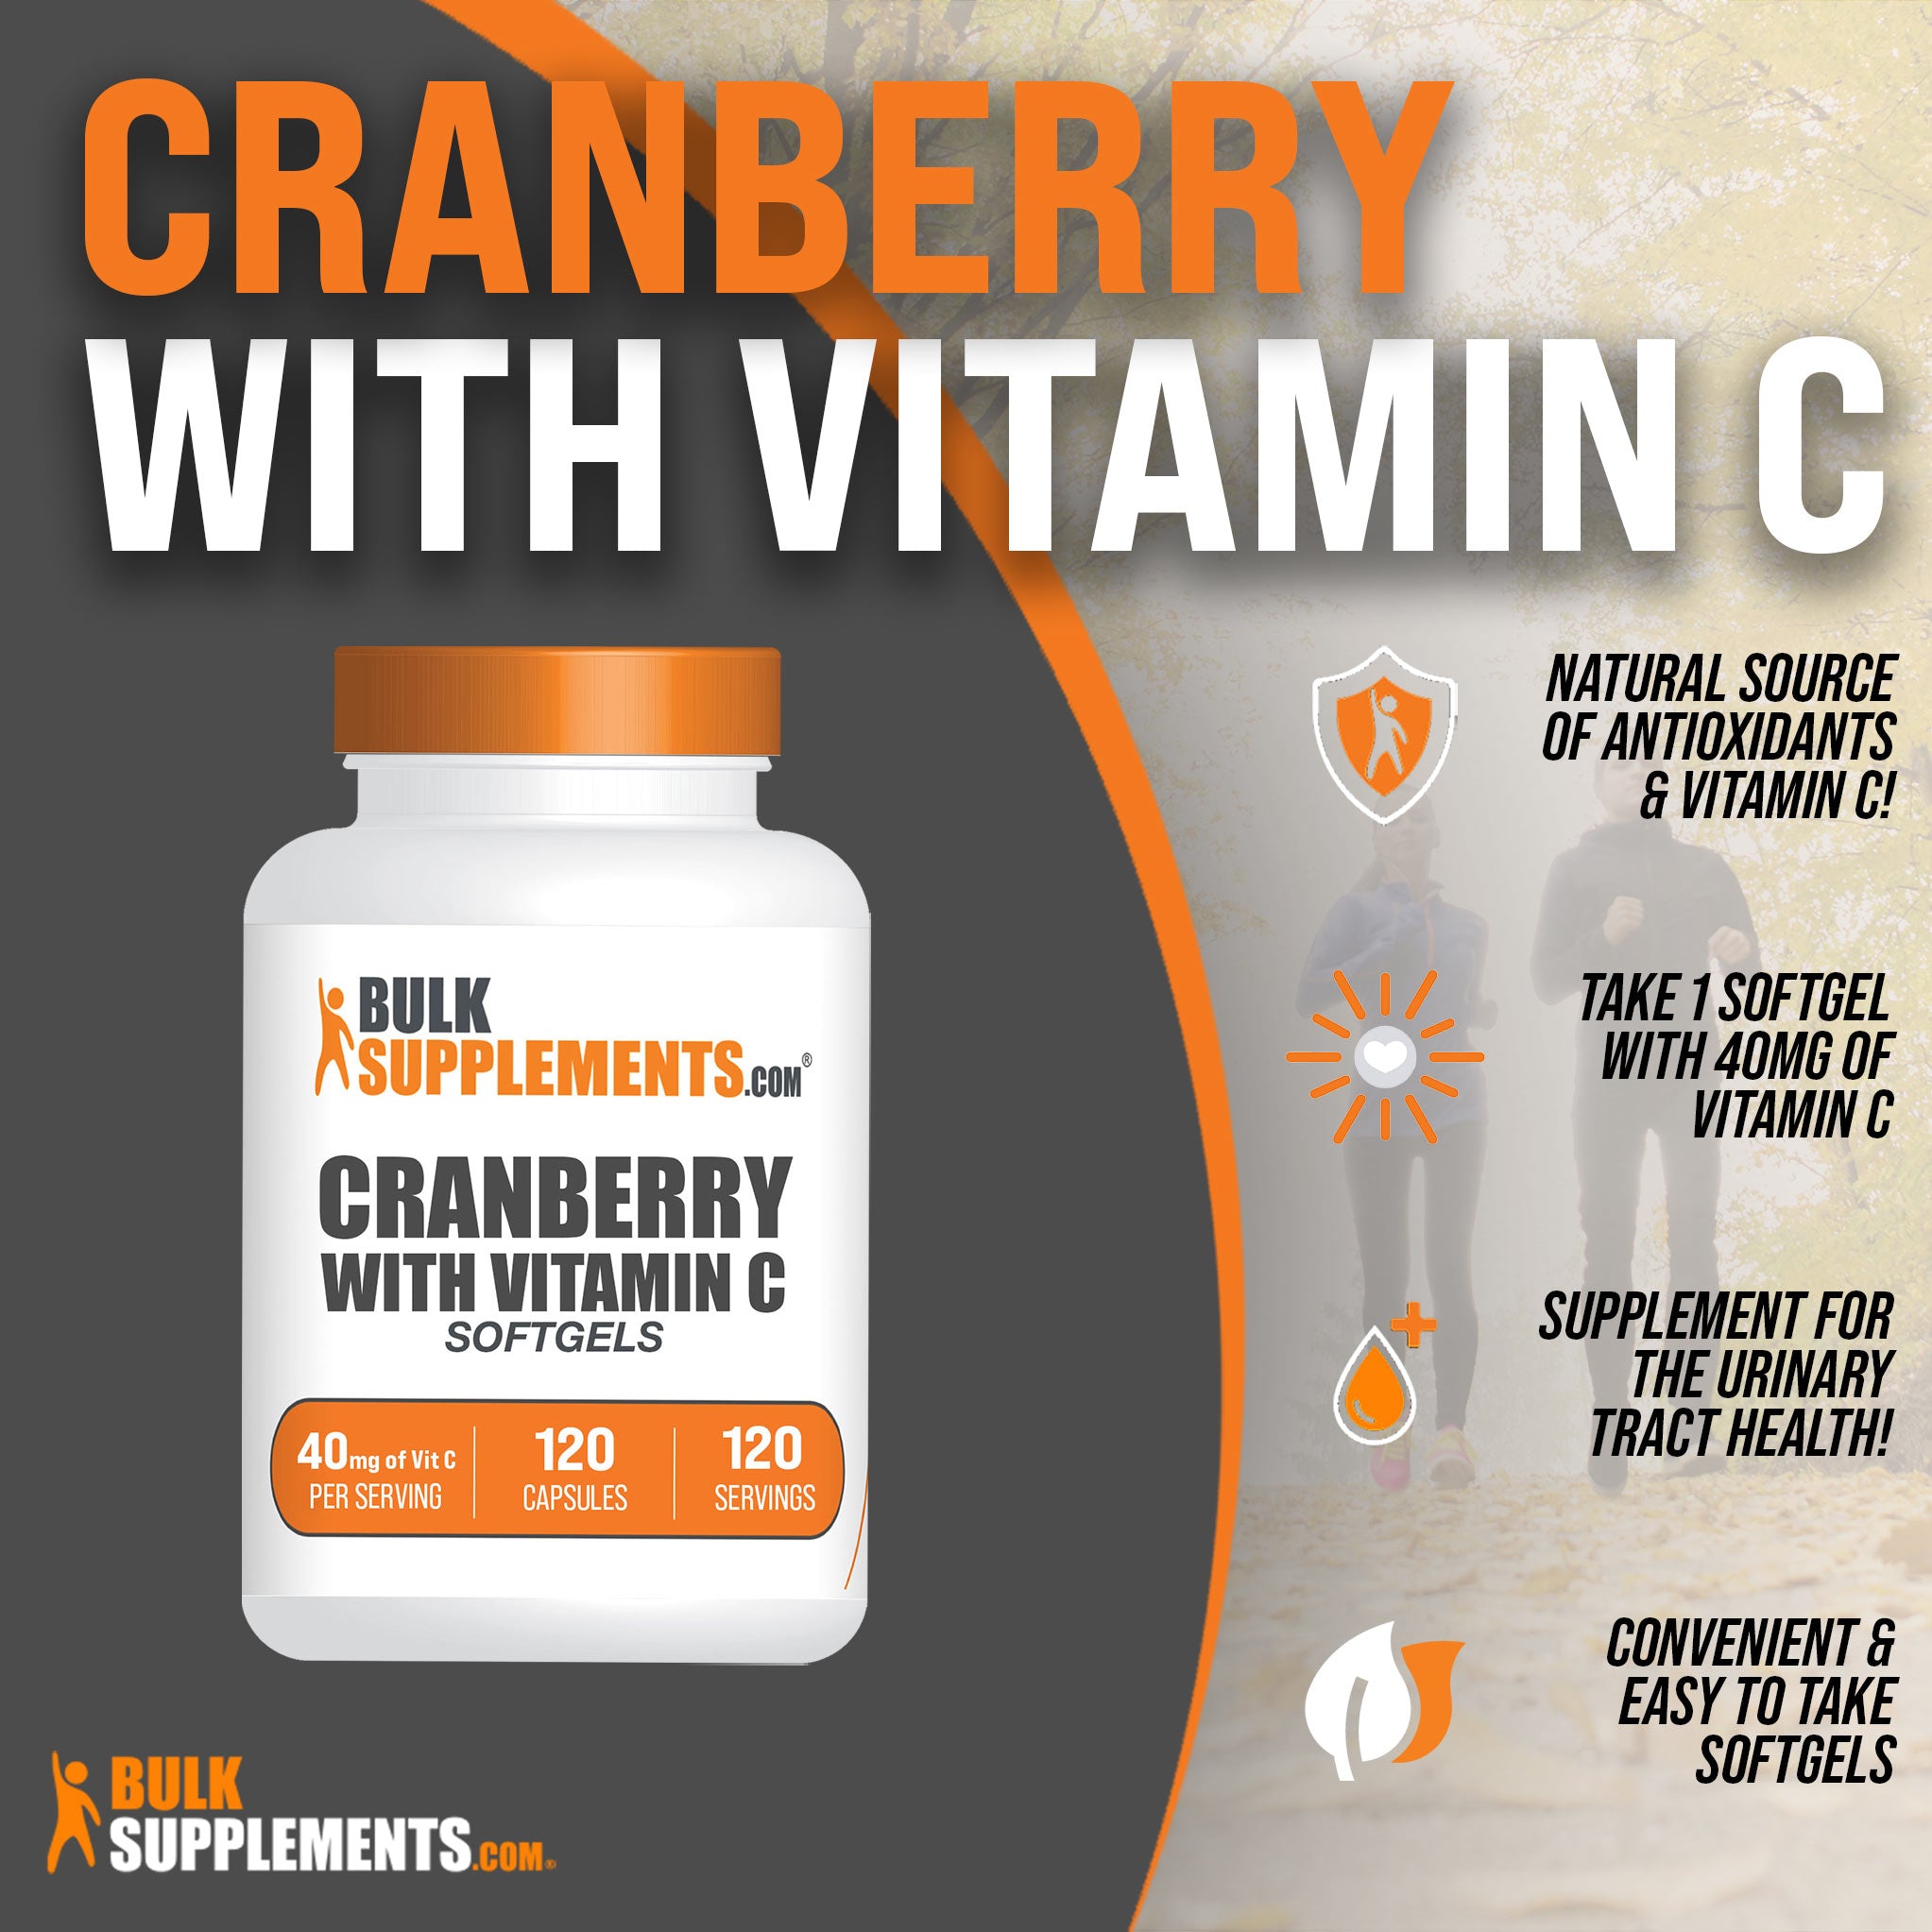 Cranberry & Vitamin C 120 softgels - Antioxidants Supplement detailing 120 capsules